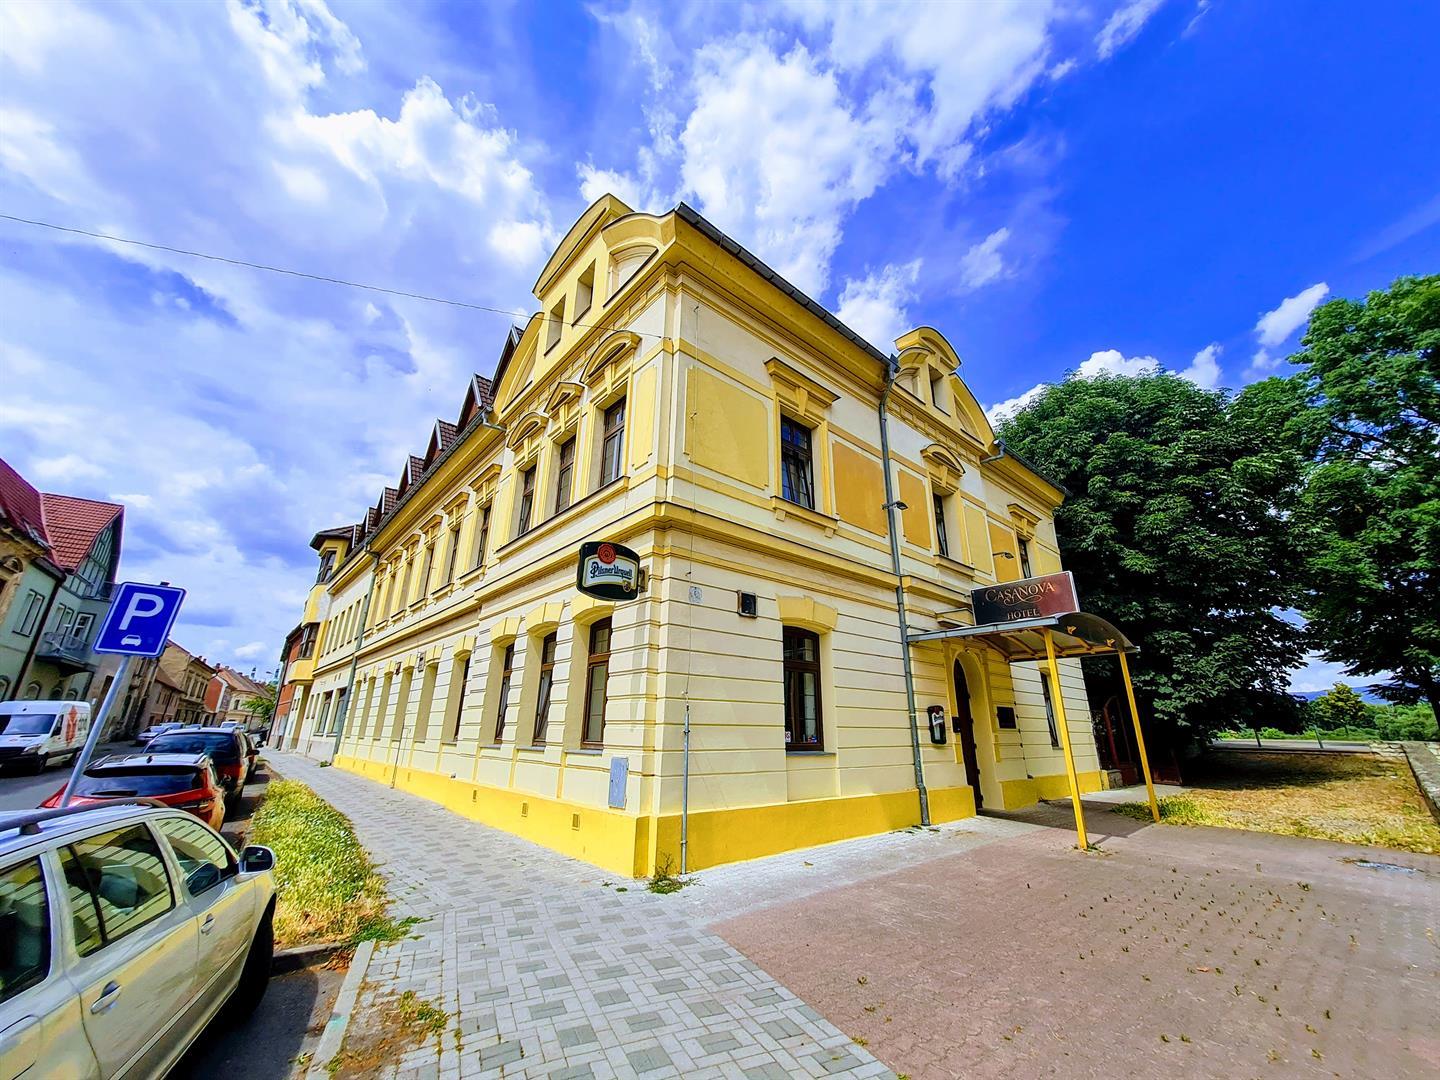 We offer for sale the established Hotel Casanova in Duchcov